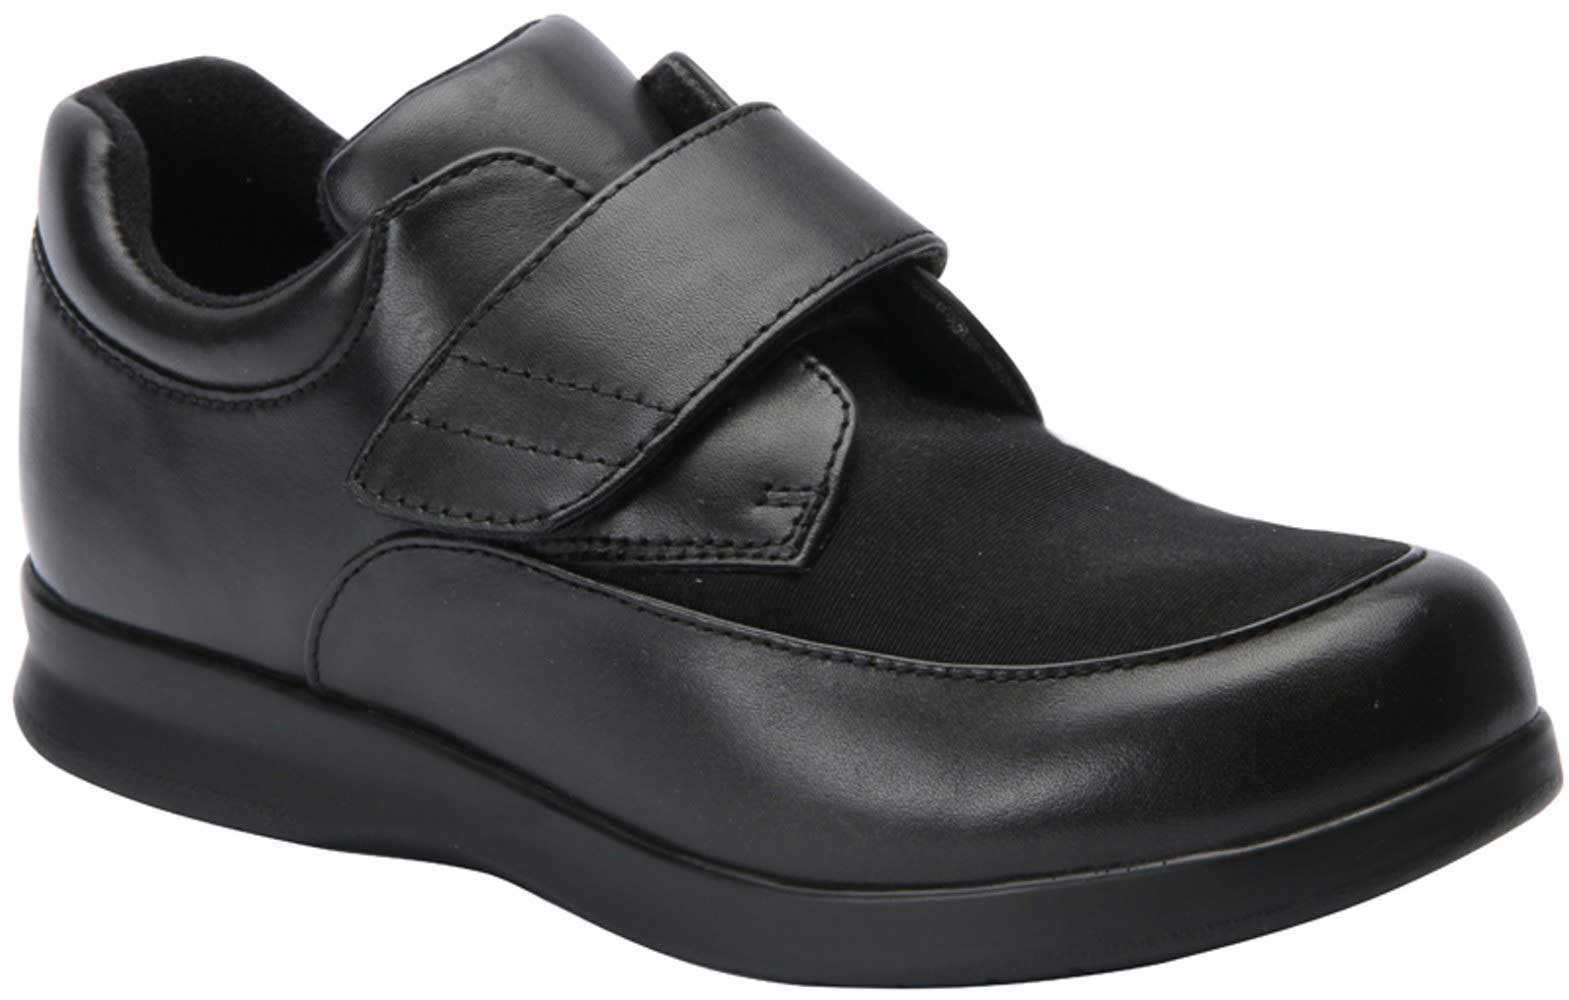 Drew Shoes Journey II 44885 - Men's Casual Comfort Therapeutic Diabetic Shoe - Extra Depth For Orthotics